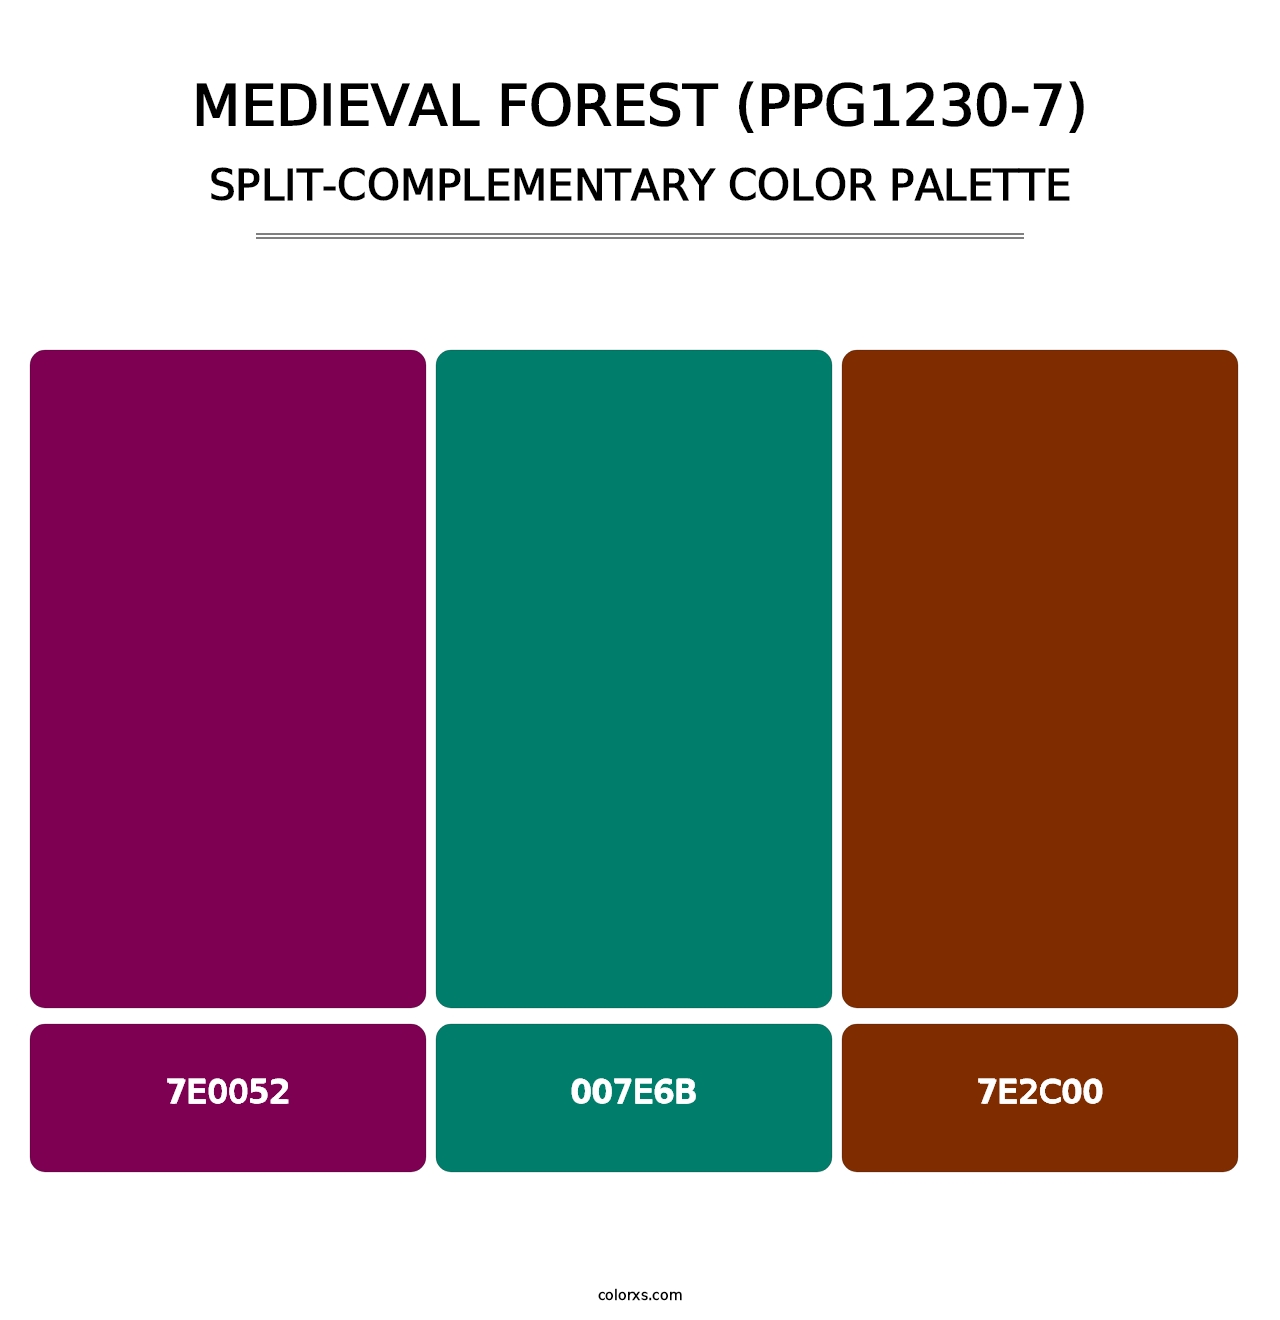 Medieval Forest (PPG1230-7) - Split-Complementary Color Palette